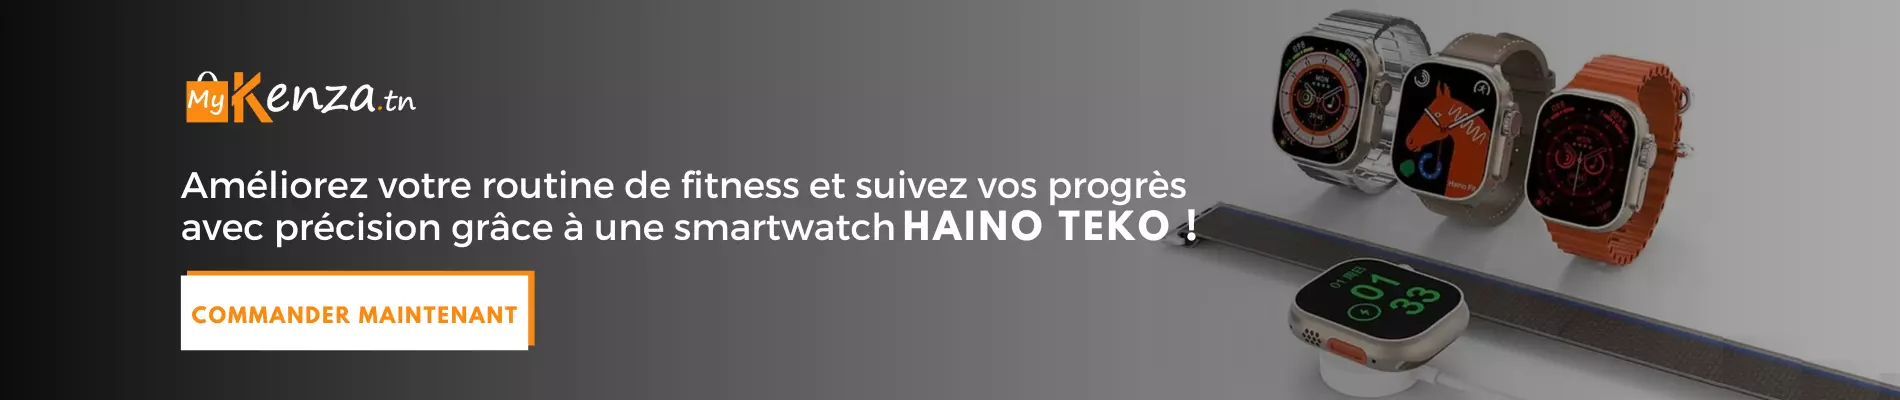 Votre routine avec Smartwatches Haino Teko